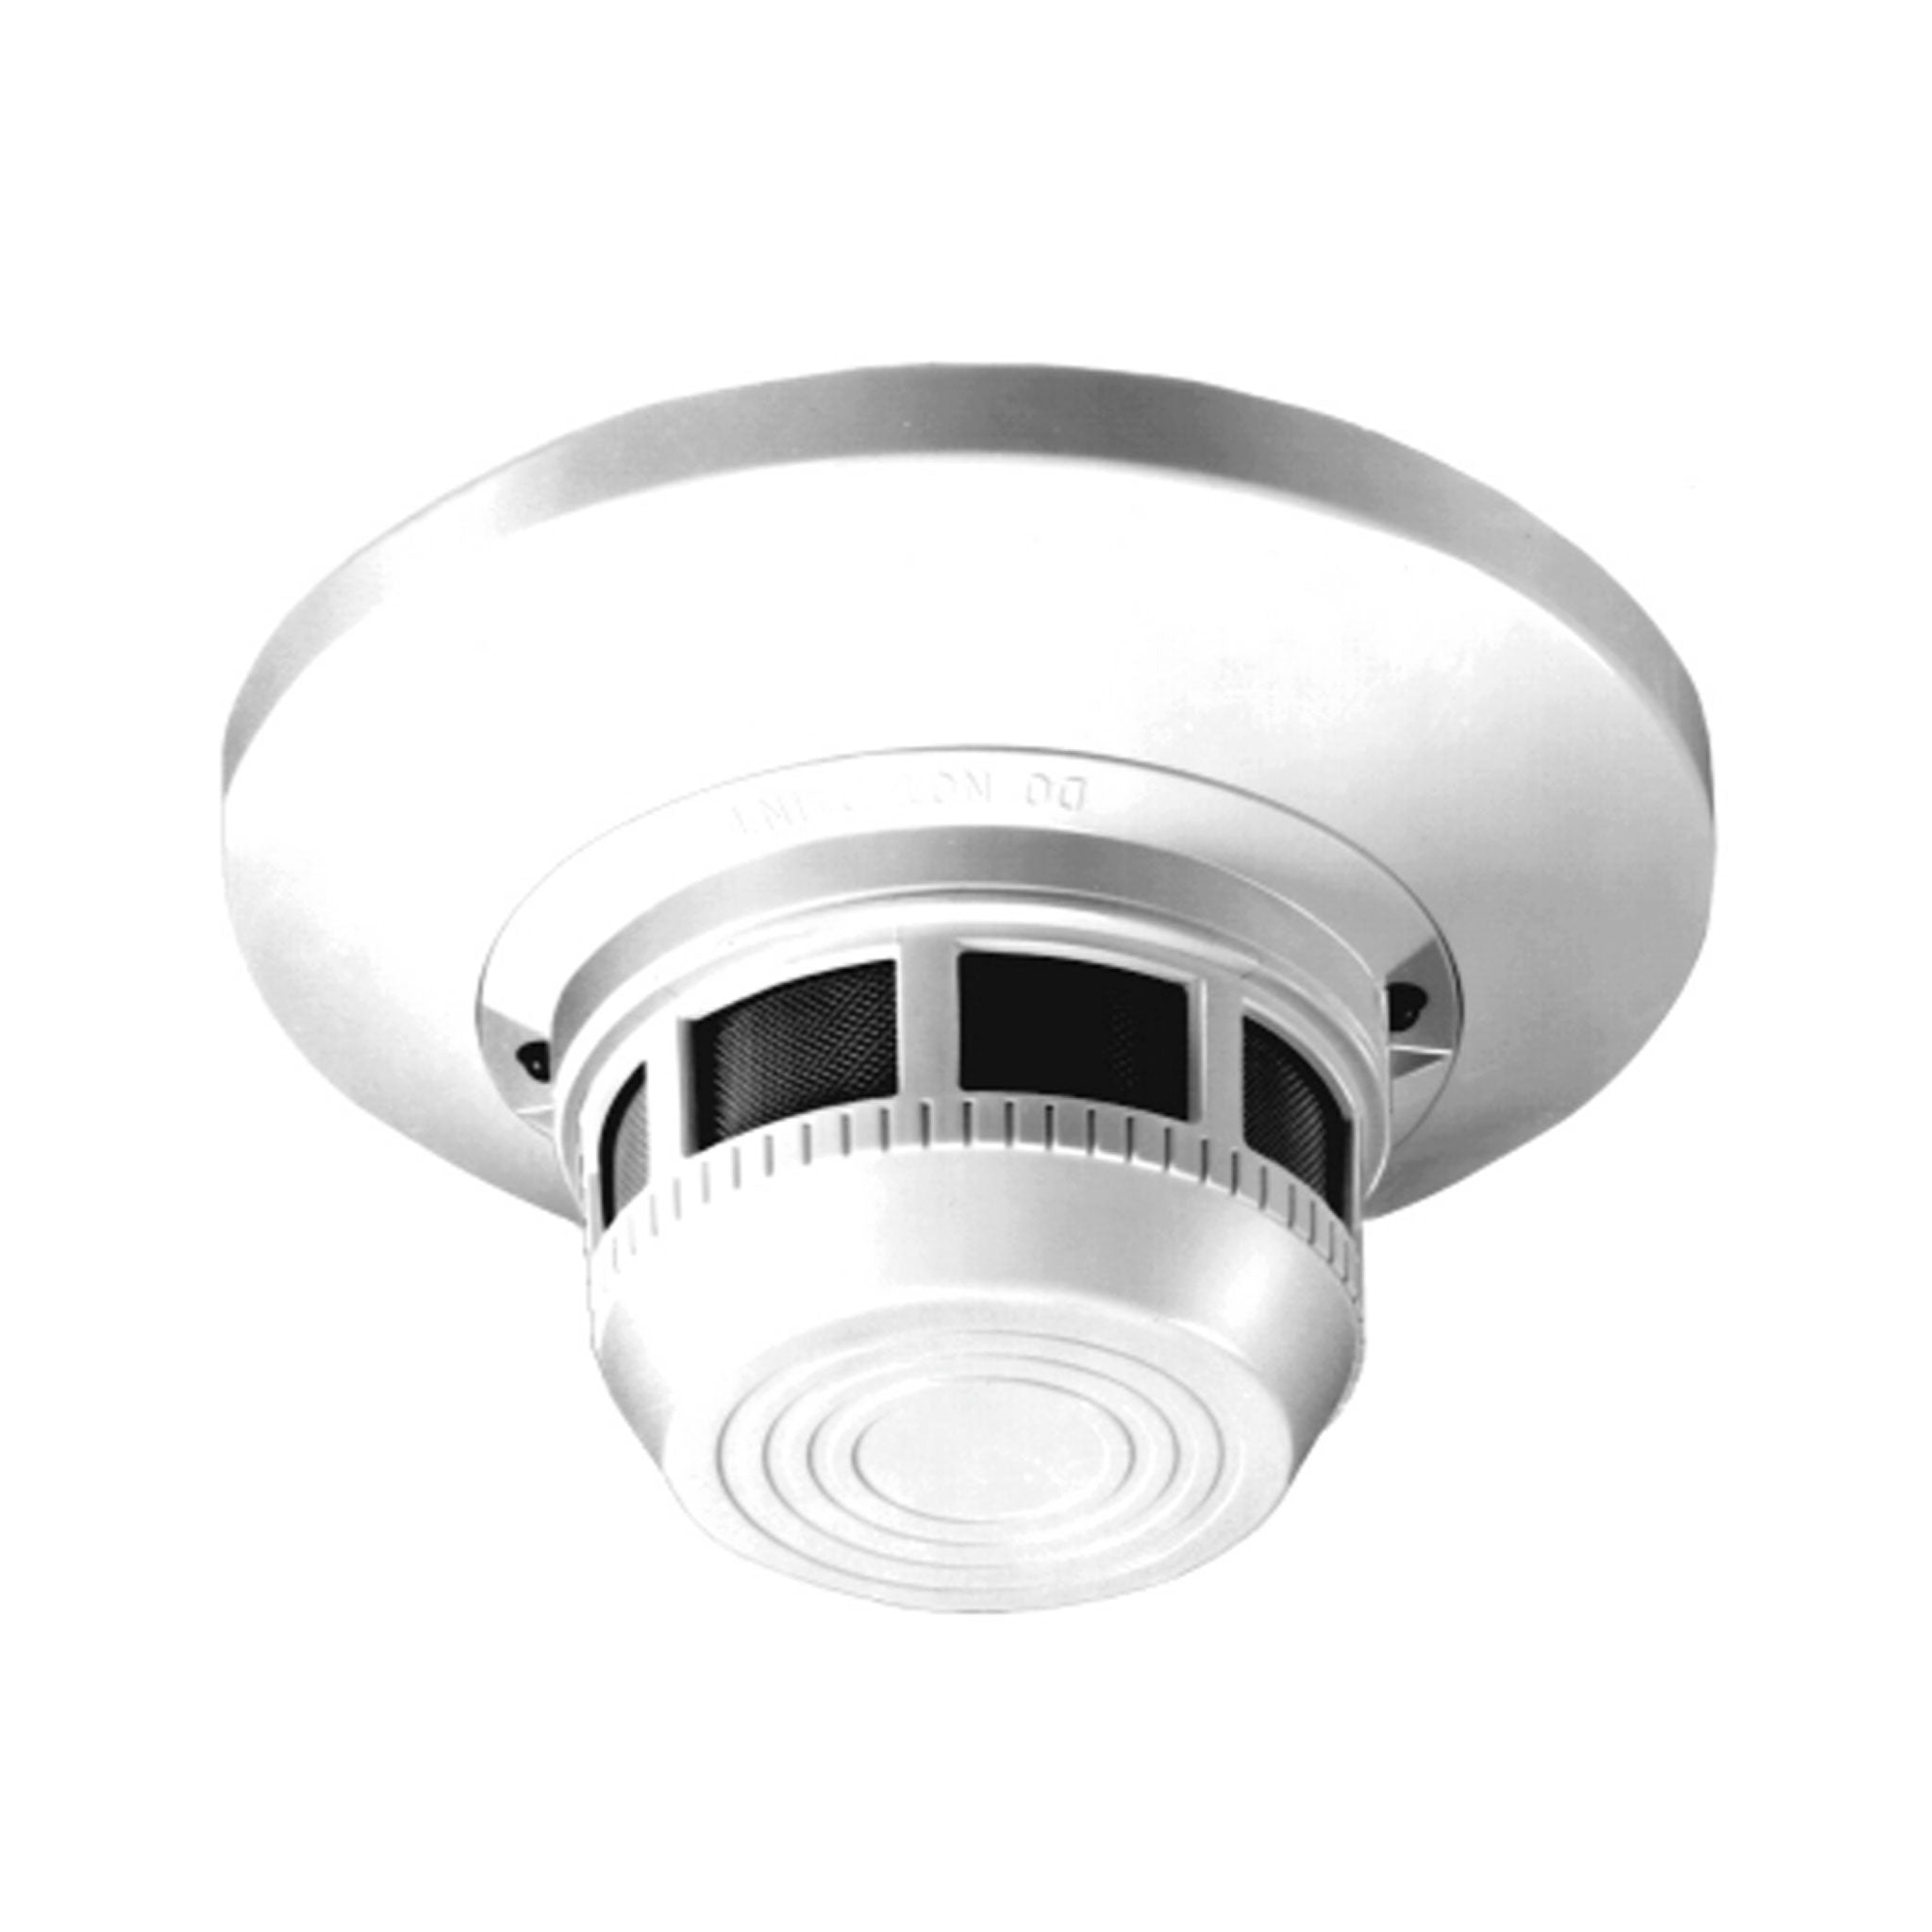 System Sensor 2451 - The Fire Alarm Supplier